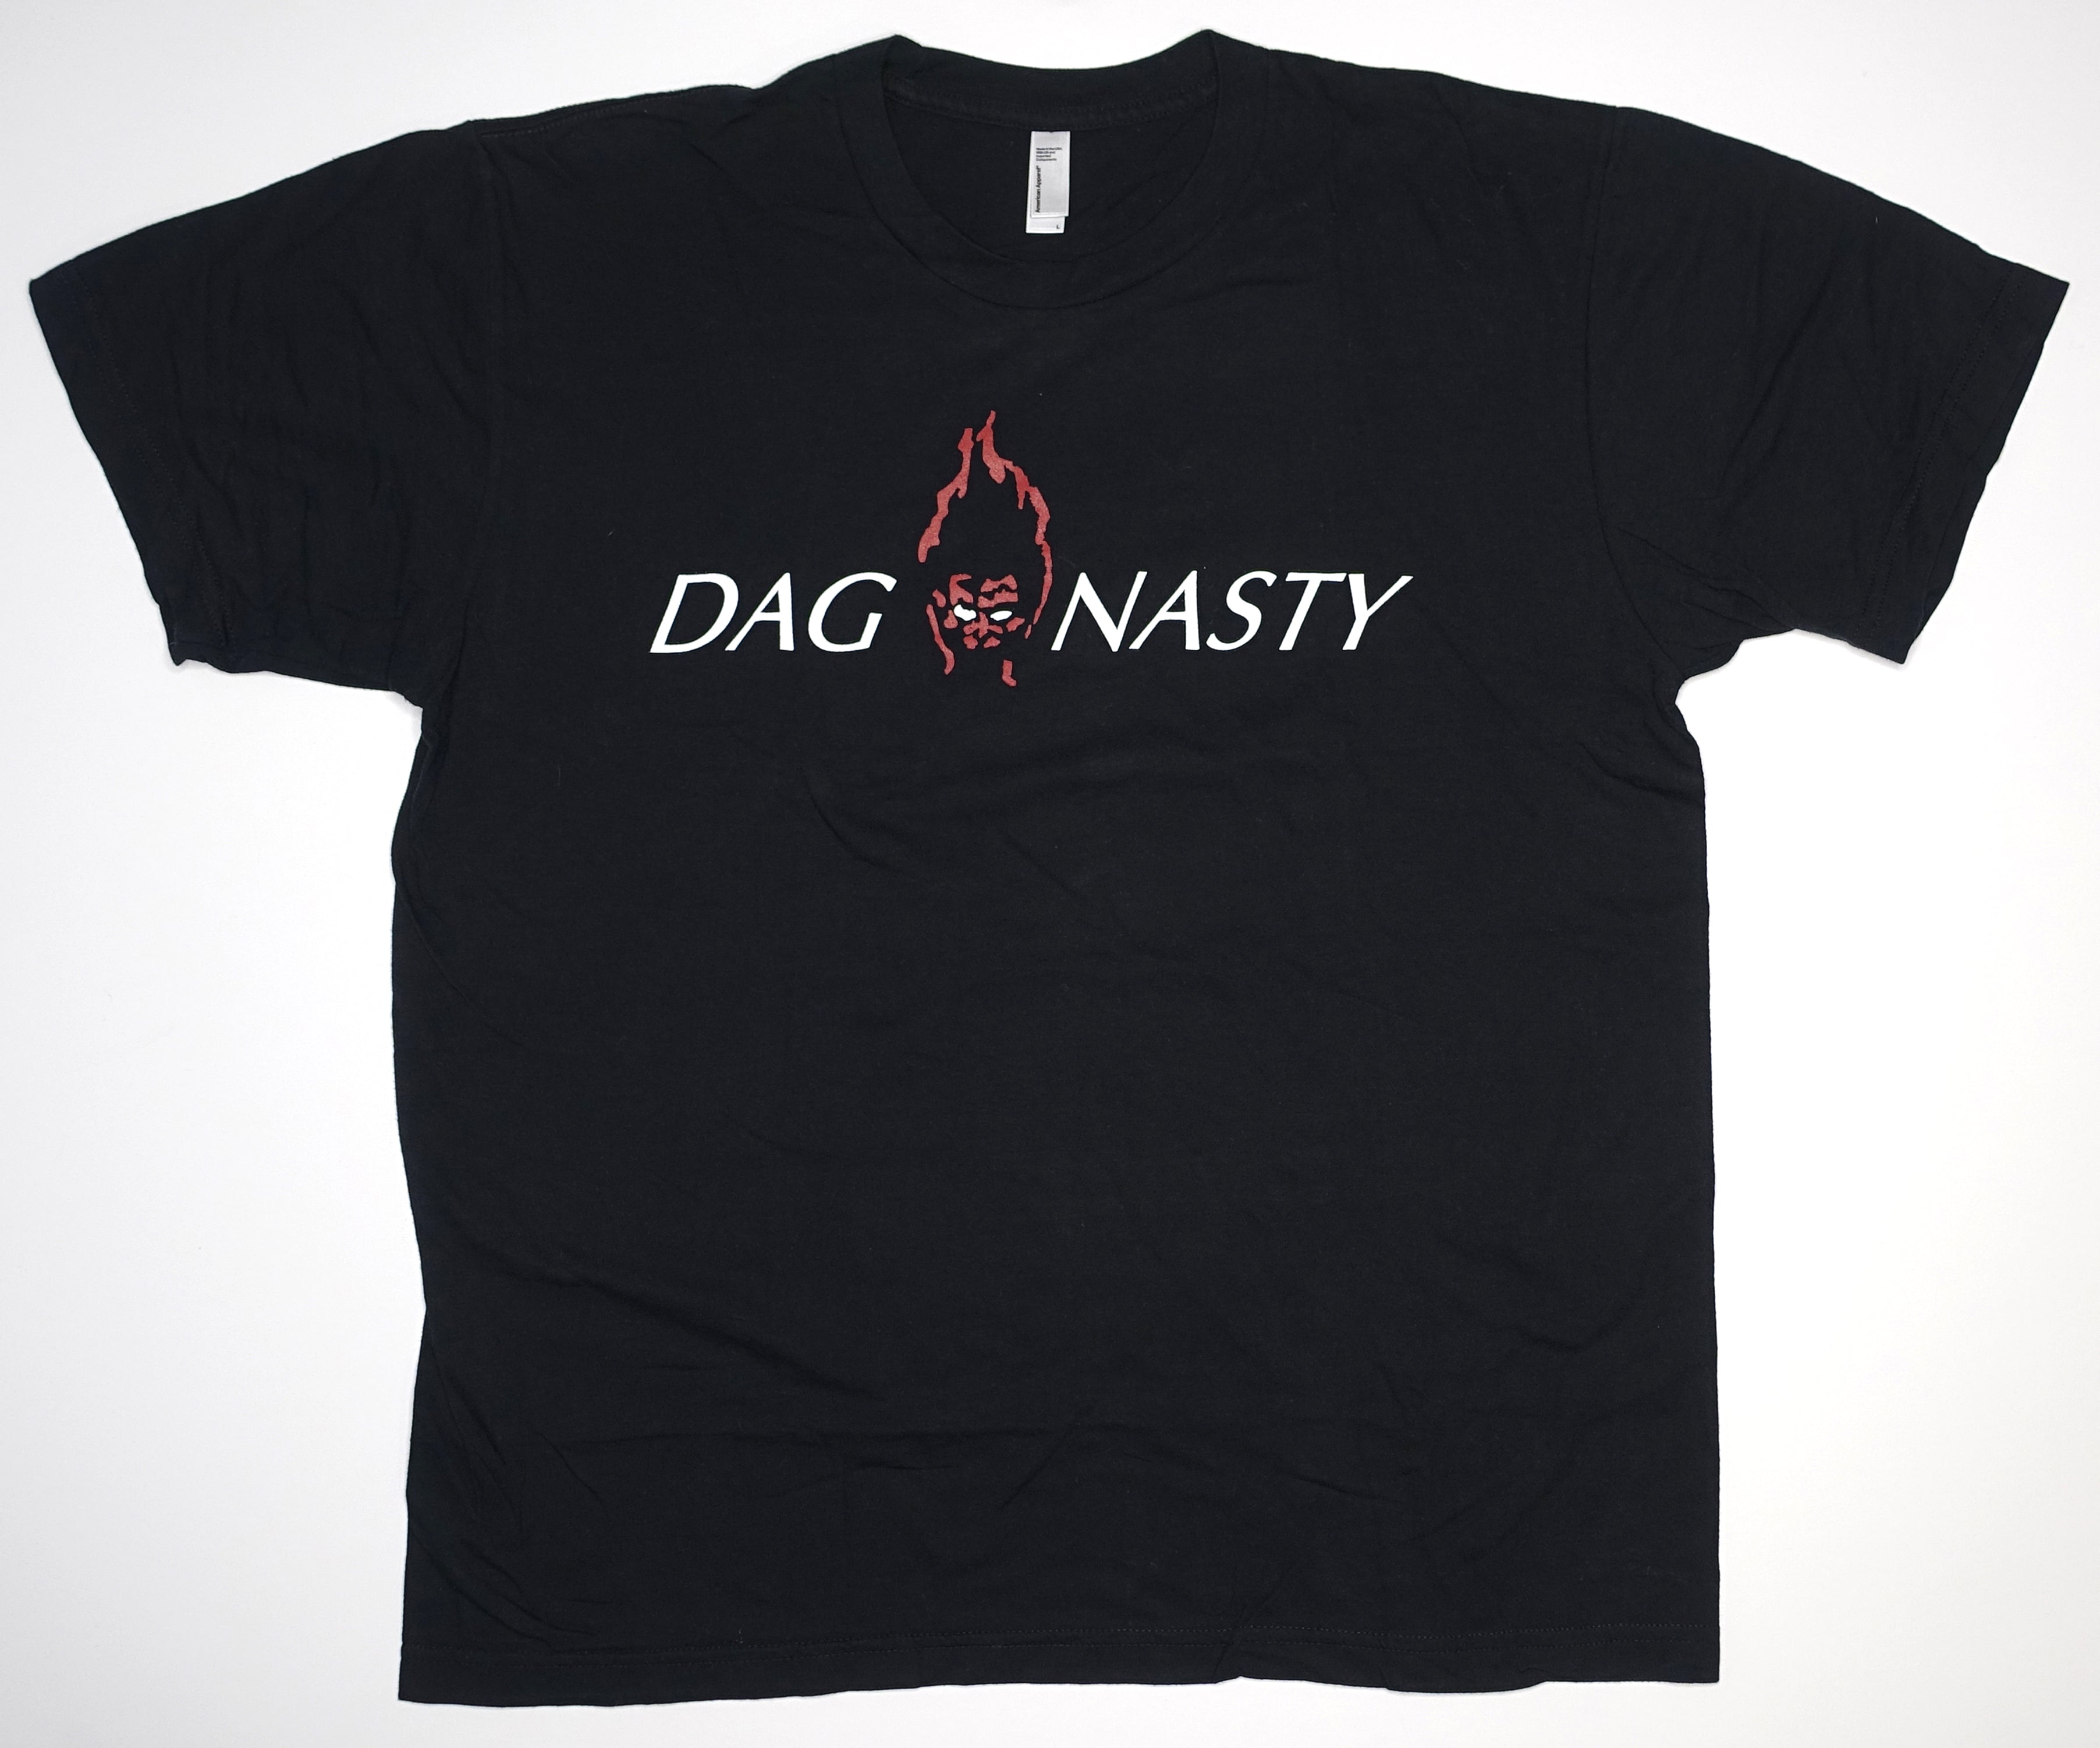 Dag Nasty - Can I Say 2015/2016 Reunion Tour Shirt Size Large (Black)